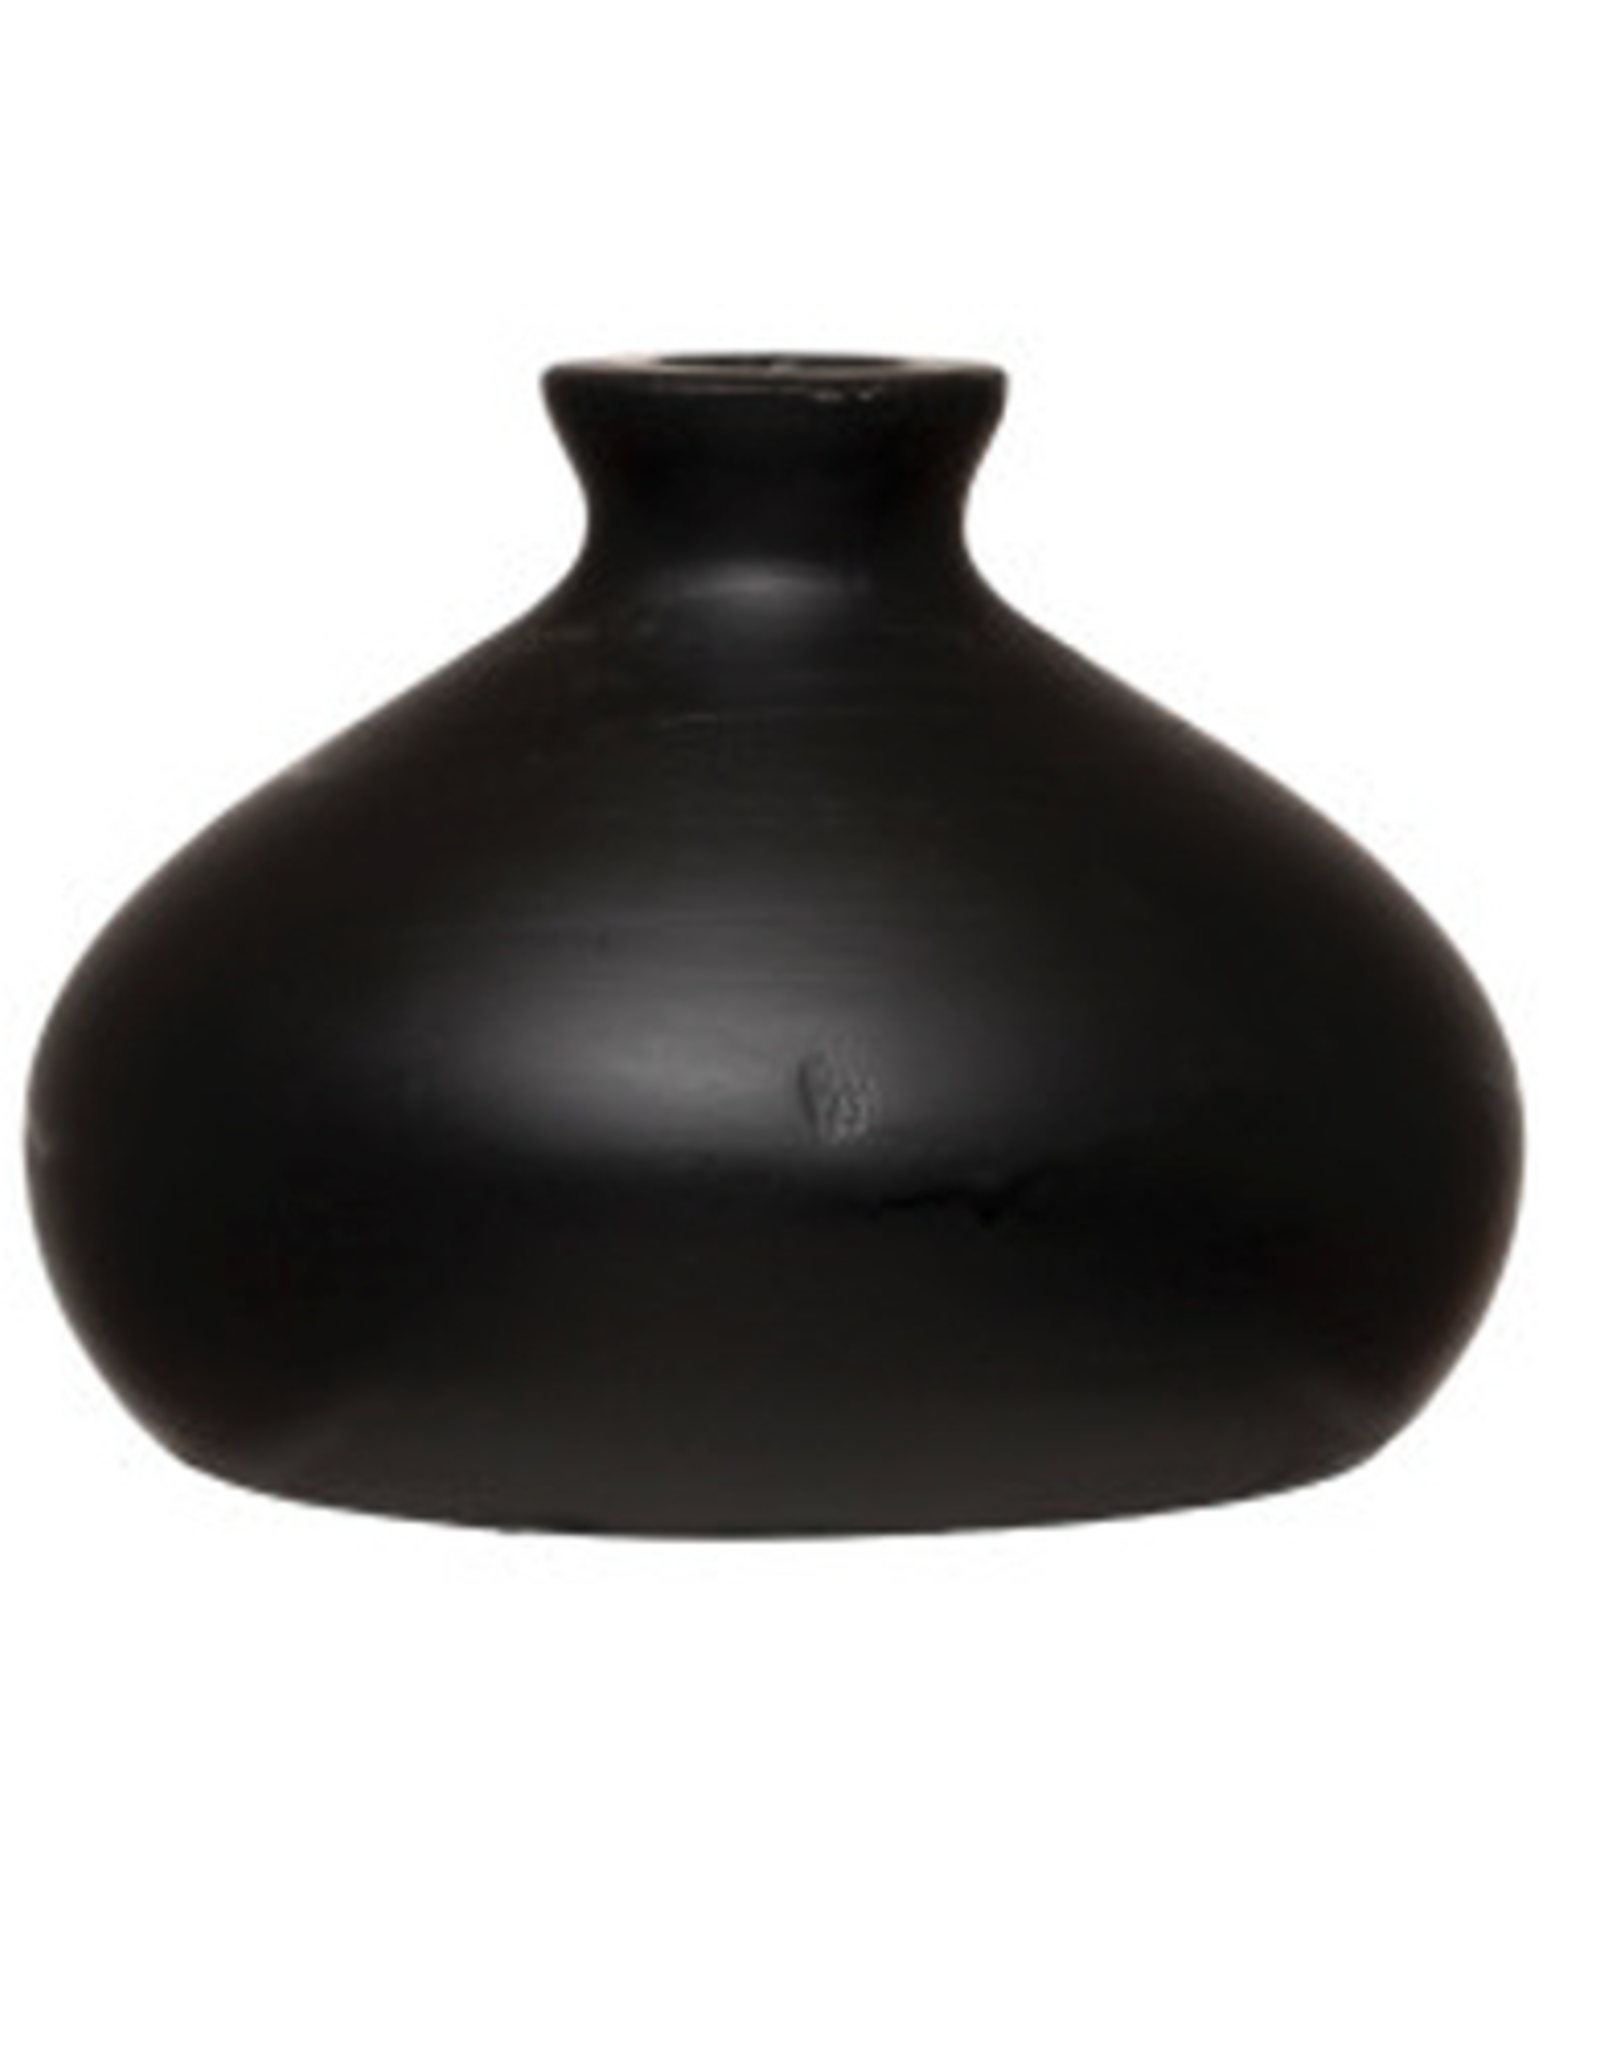 Black Paulownia Wood Vase D7.5" H5"